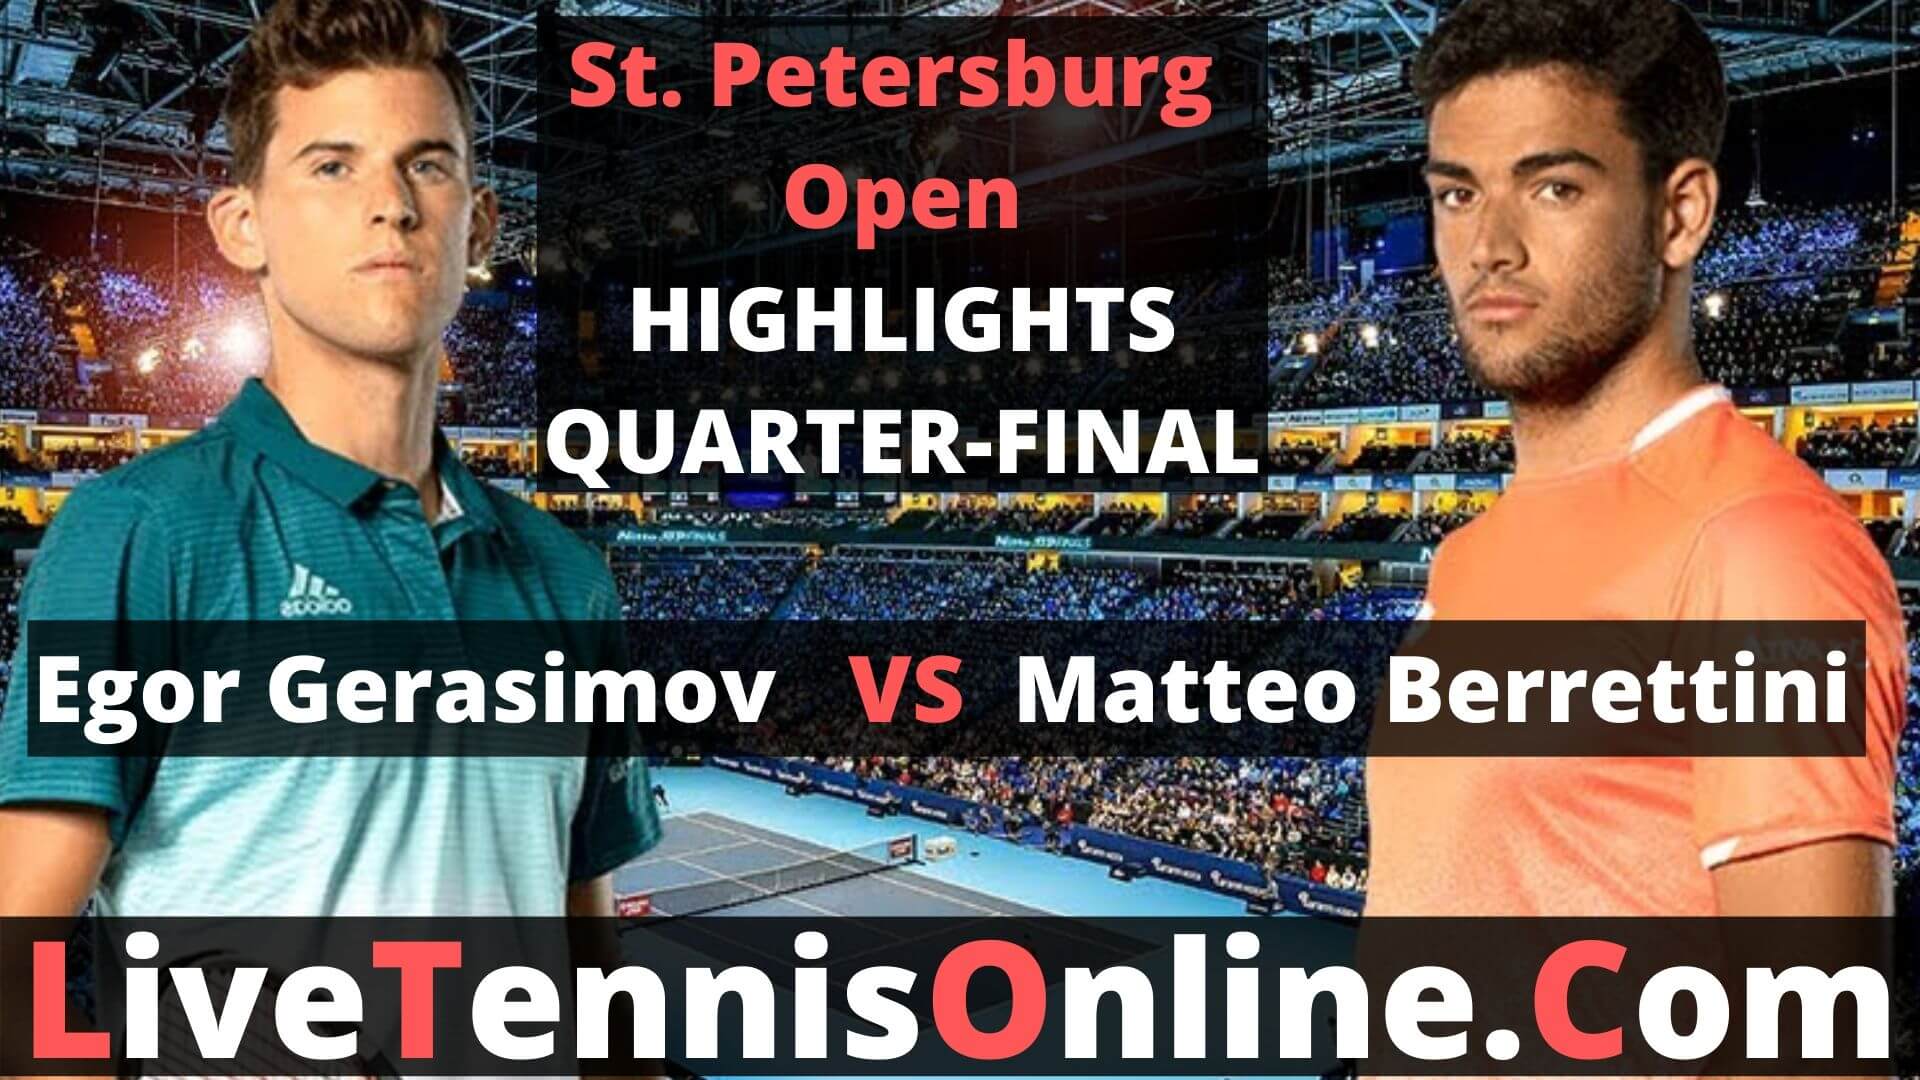 Matteo Berrettini Vs Egor Gerasimov Highlights 2019 St. Petersburg Open QF